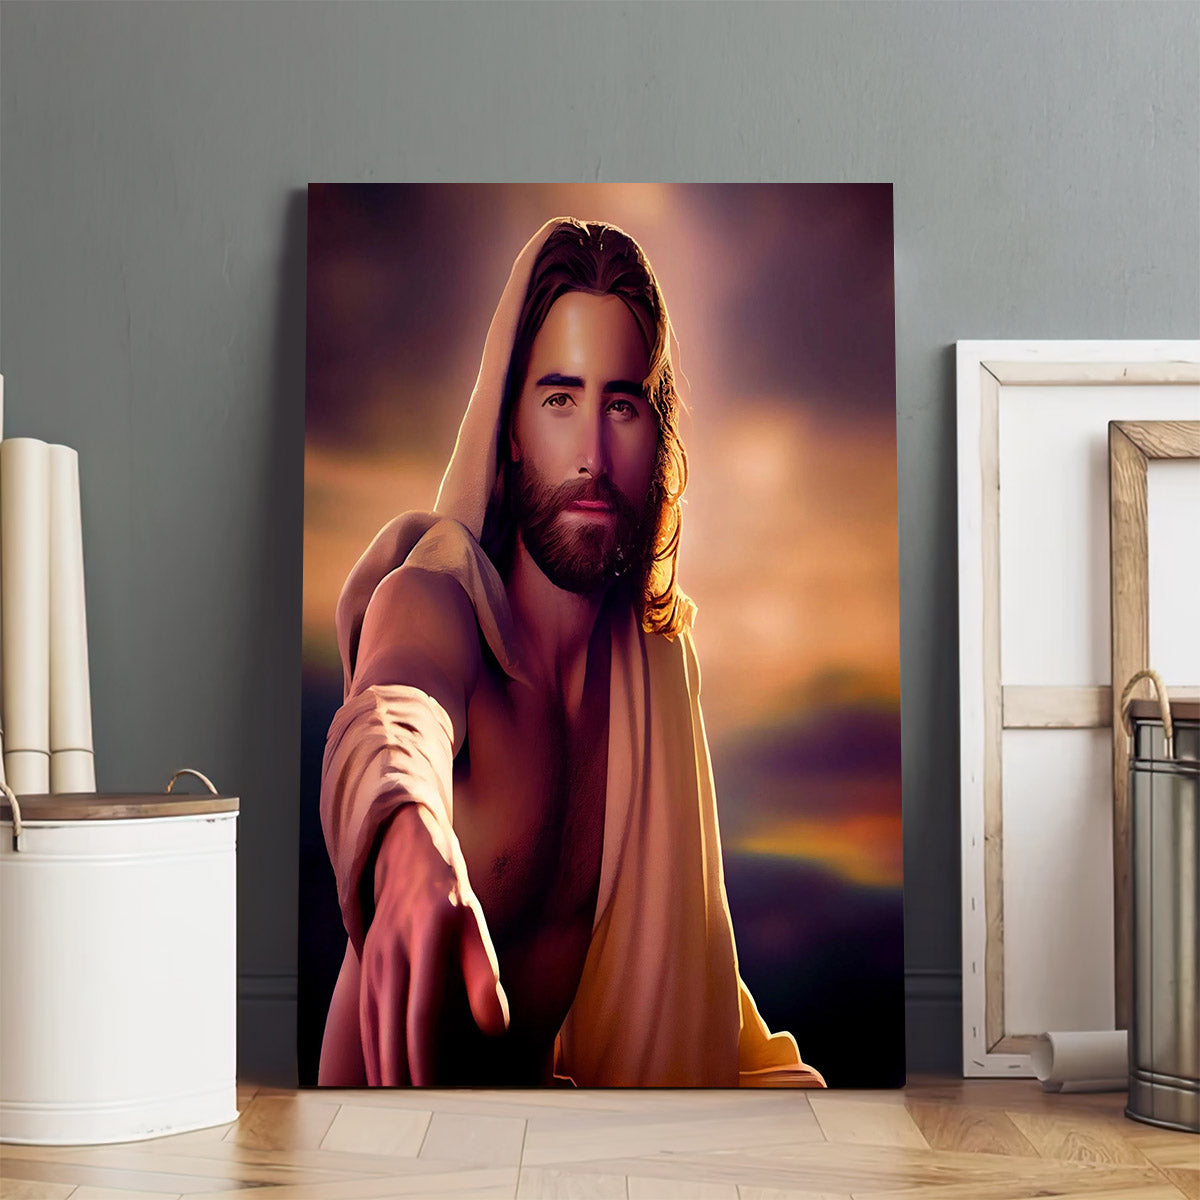 Jesus Christ 1 - Jesus Canvas Pictures - Christian Wall Art